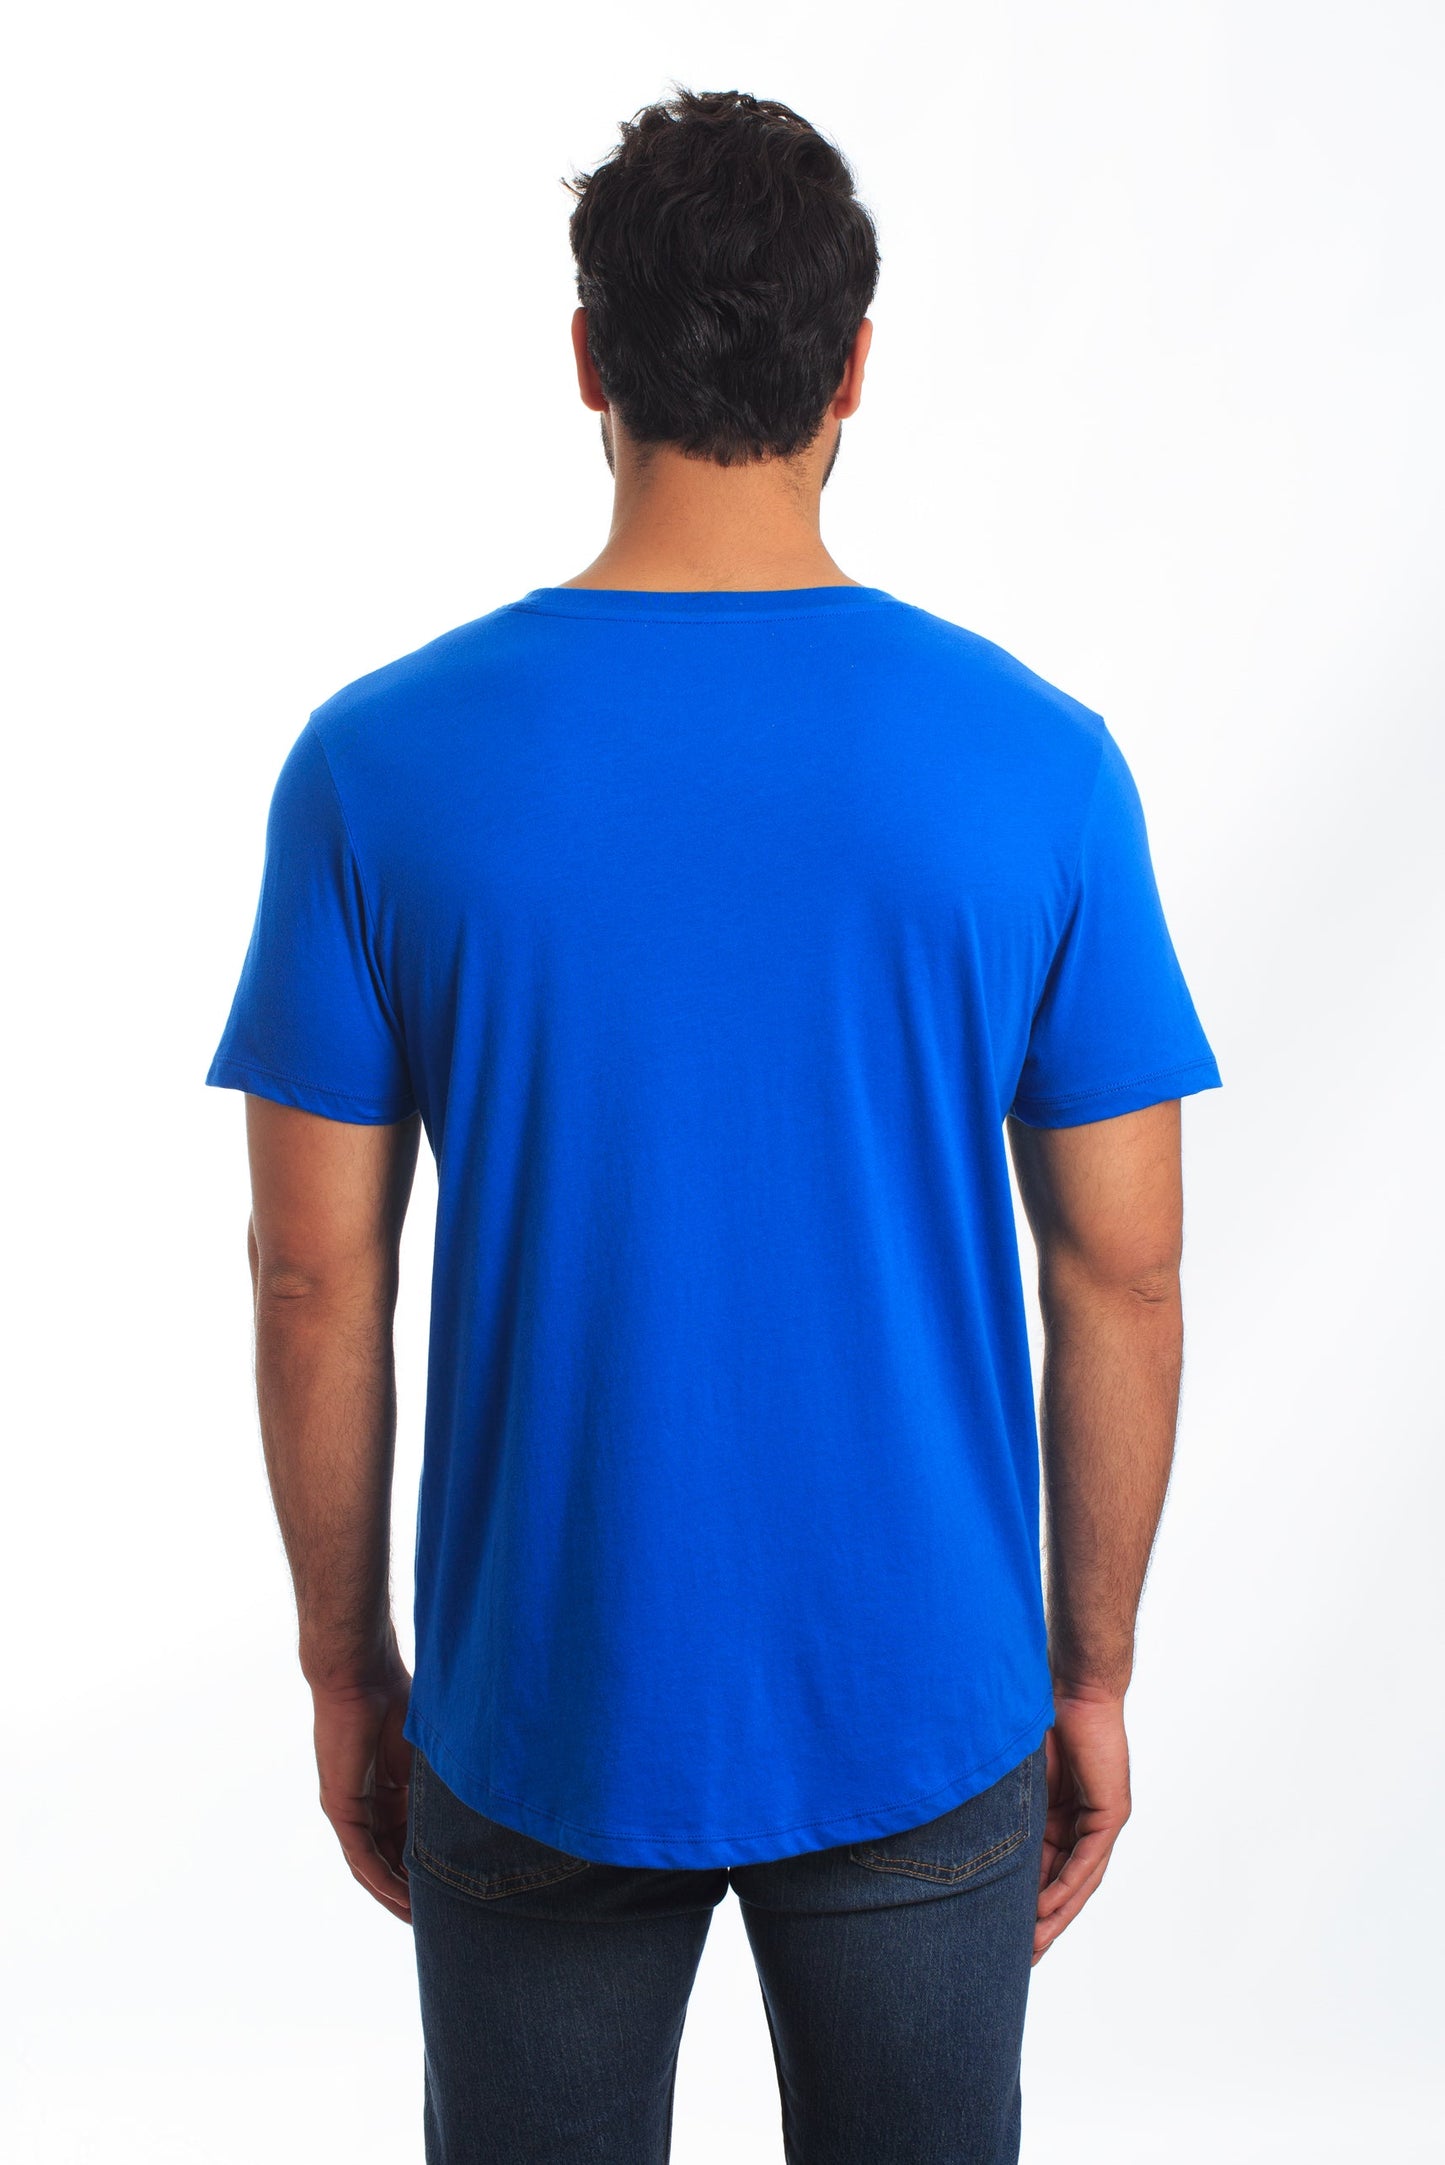 Blue T-Shirt TEE-125 Back